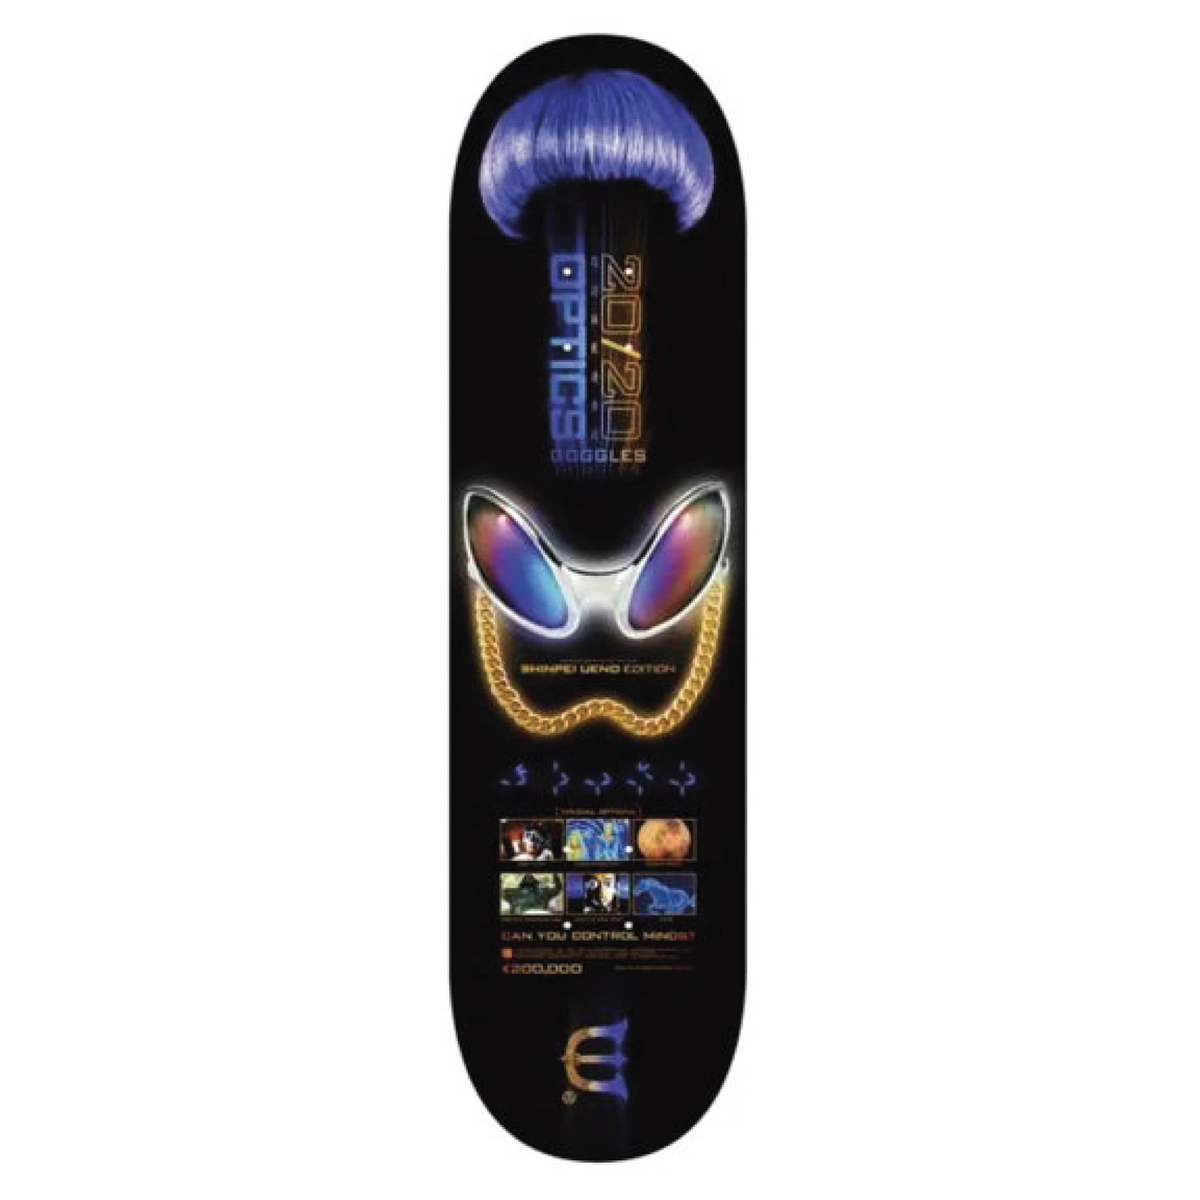 EVISEN SKATEBOARDS - 8.125" SHINPEI UENO skate deck